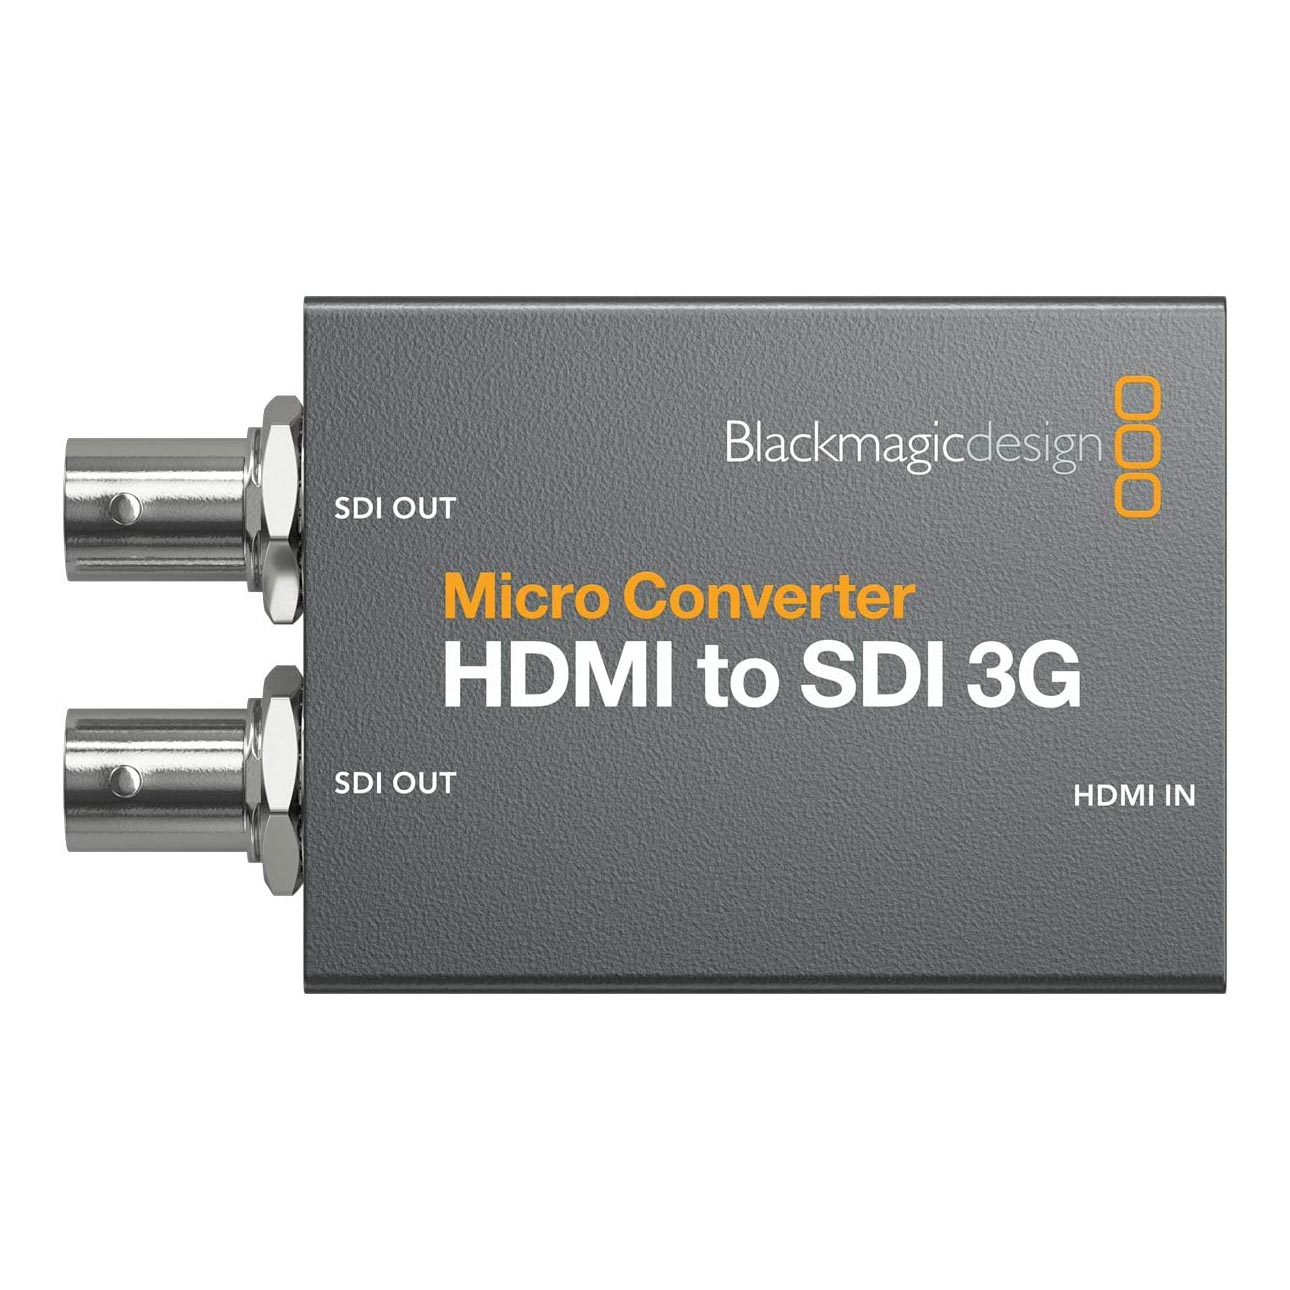 micro converter sdi to hdmi 3g микро конвертер Конвертер Blackmagic Design Micro Converter HDMI to SDI 3G